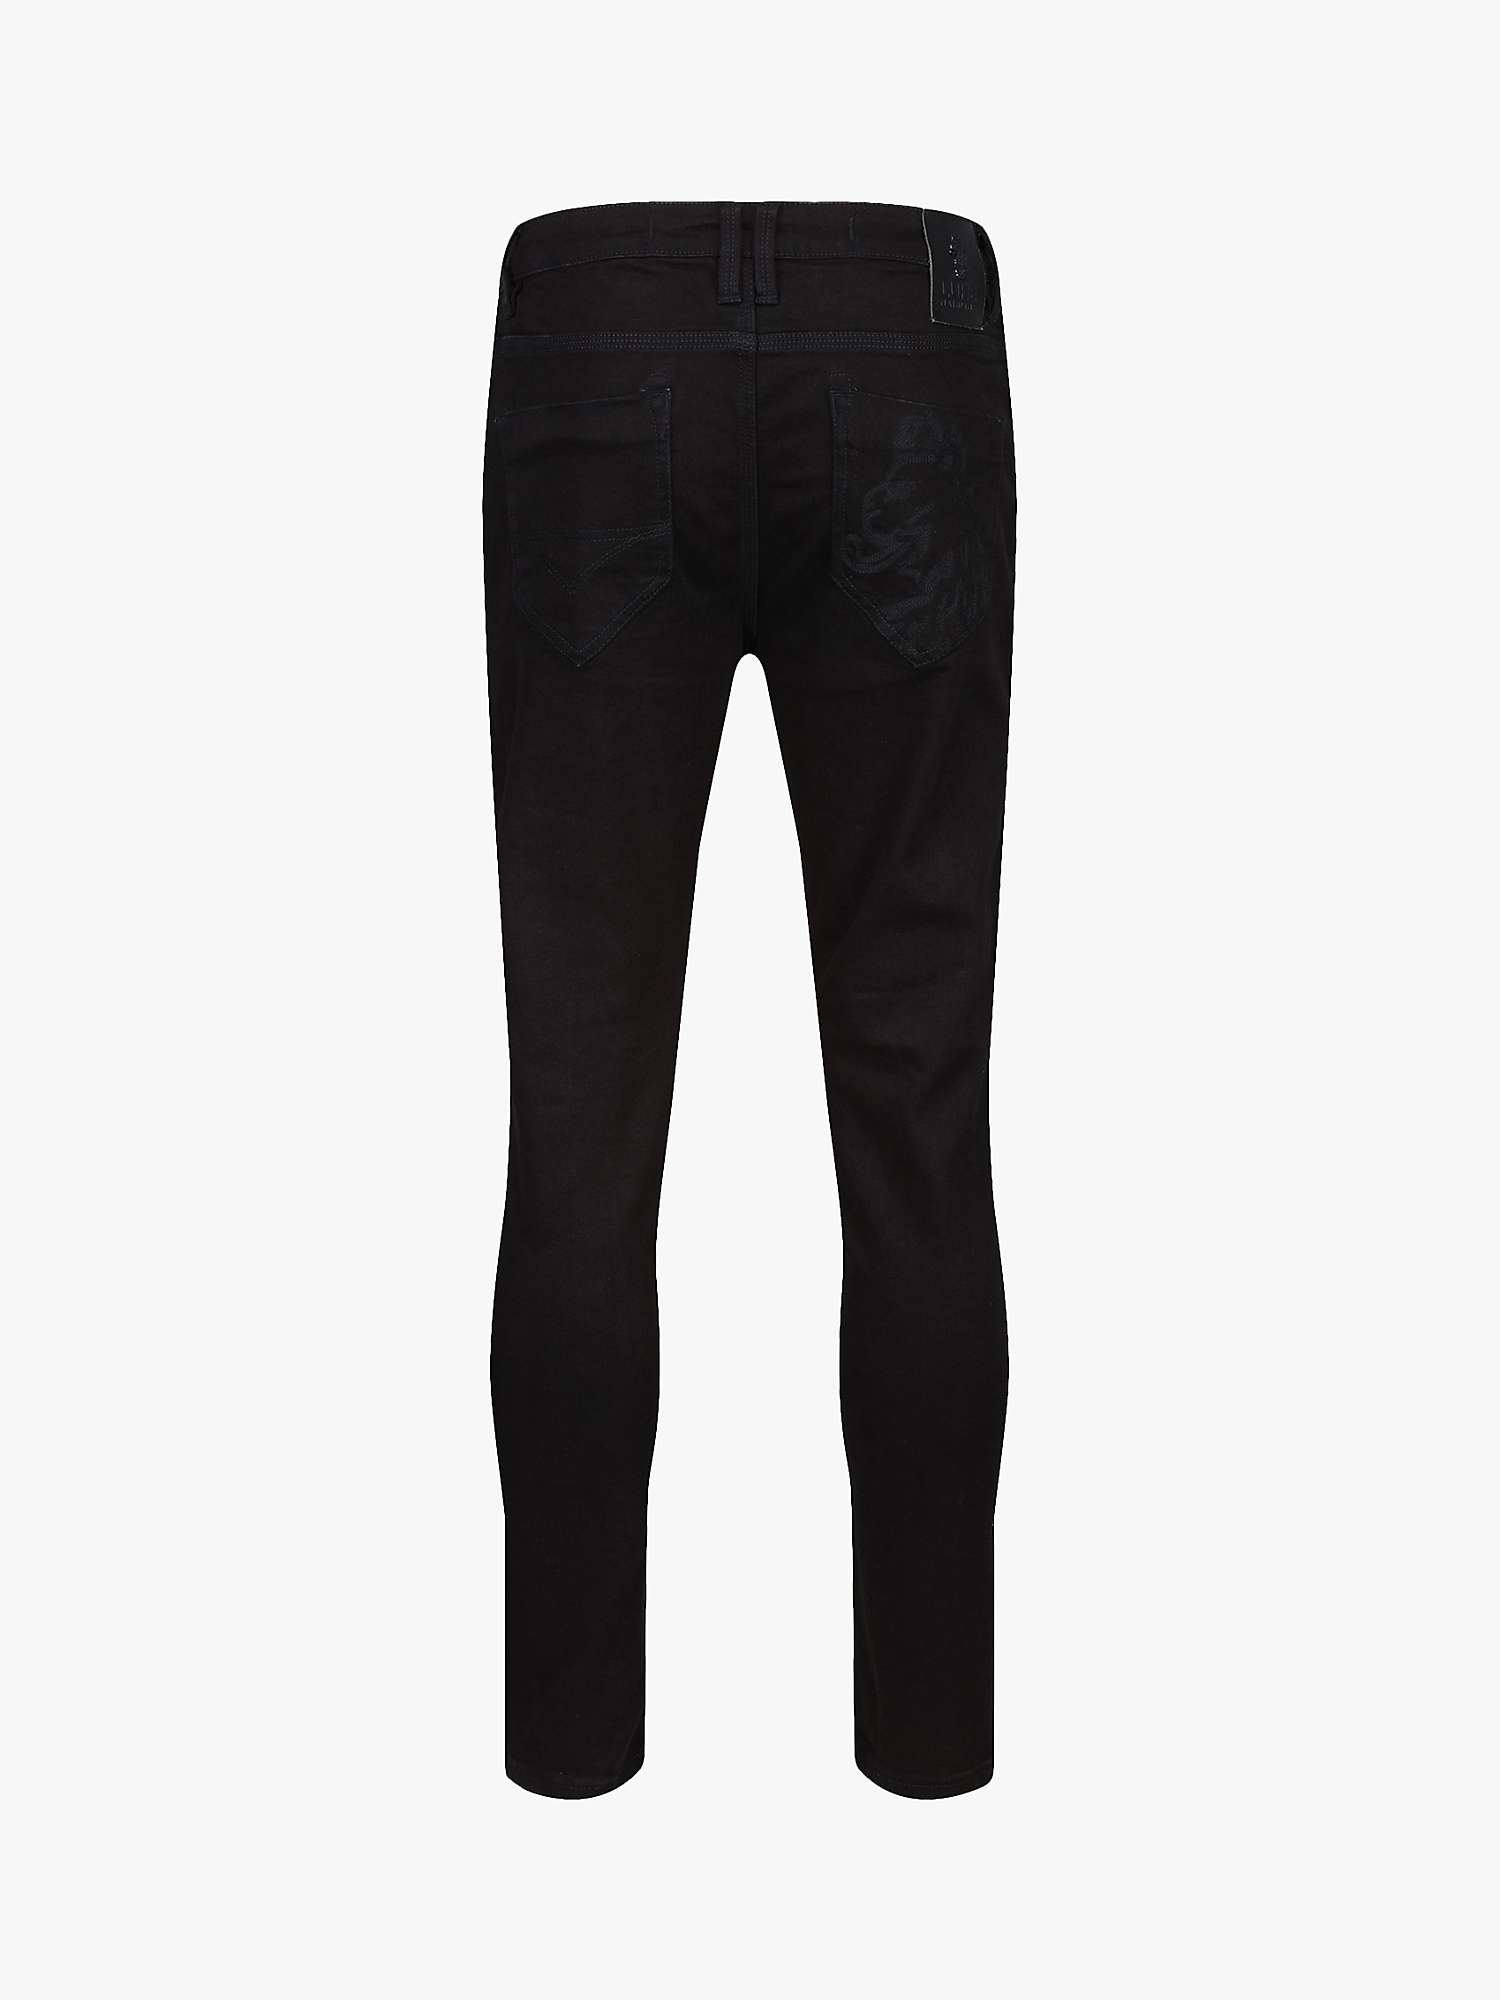 LUKE 1977 Vacuum Demin Slim Fit Jeans, Black Worn at John Lewis & Partners